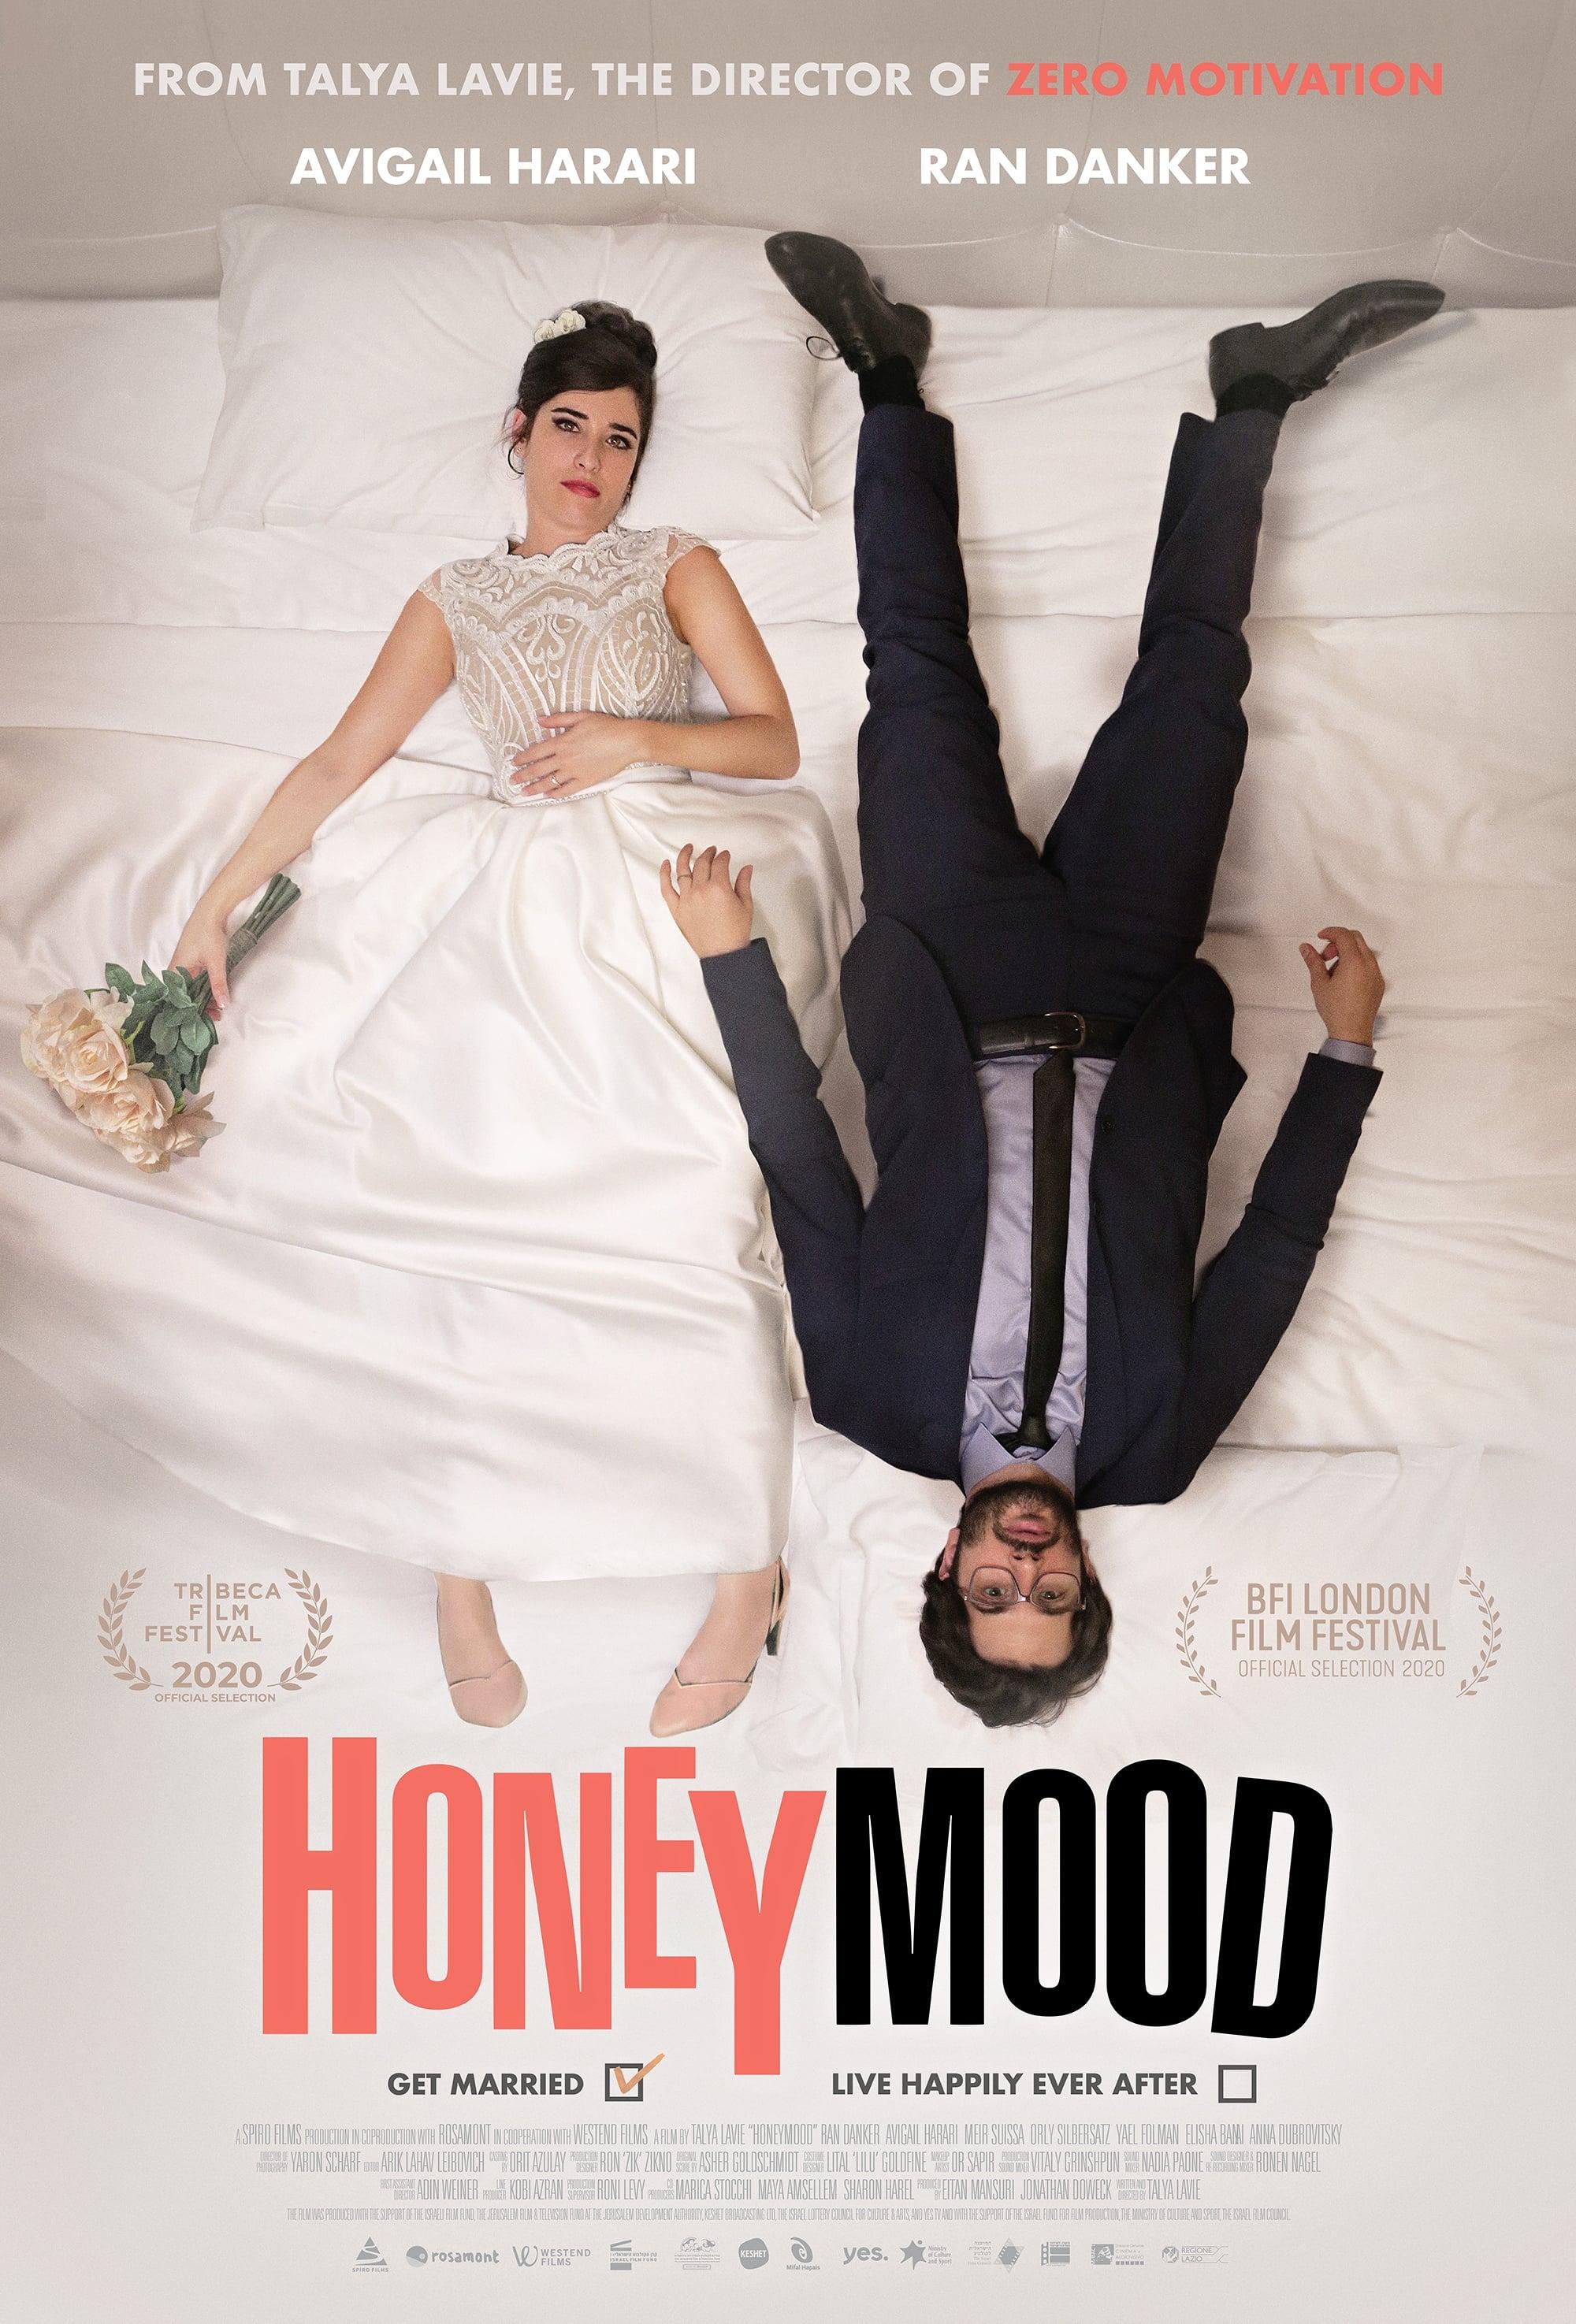 Honeymood poster